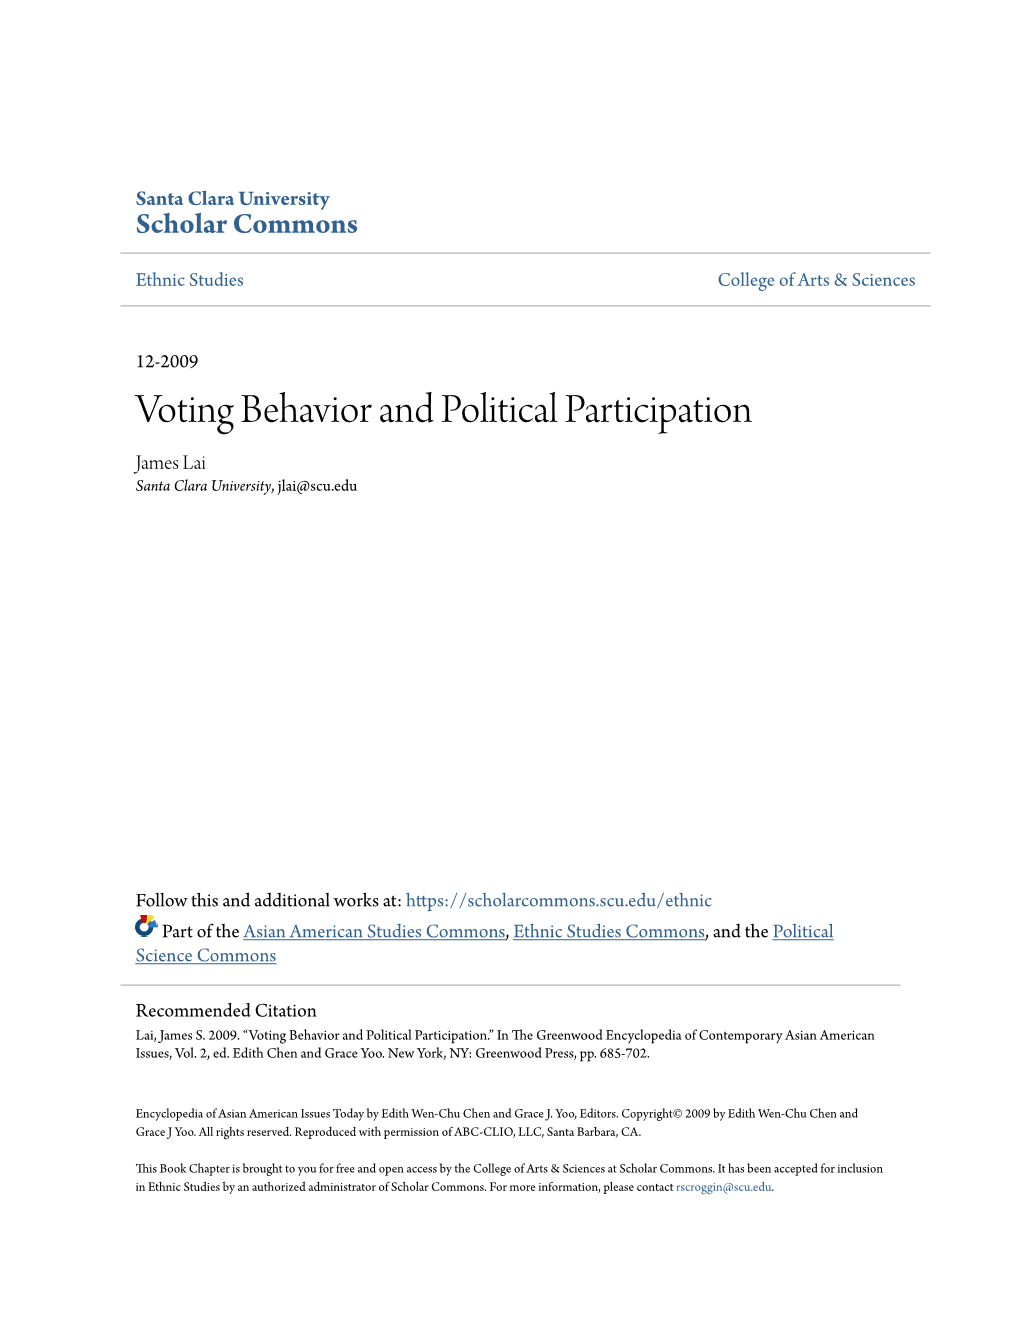 Voting Behavior and Political Participation James Lai Santa Clara University, Jlai@Scu.Edu